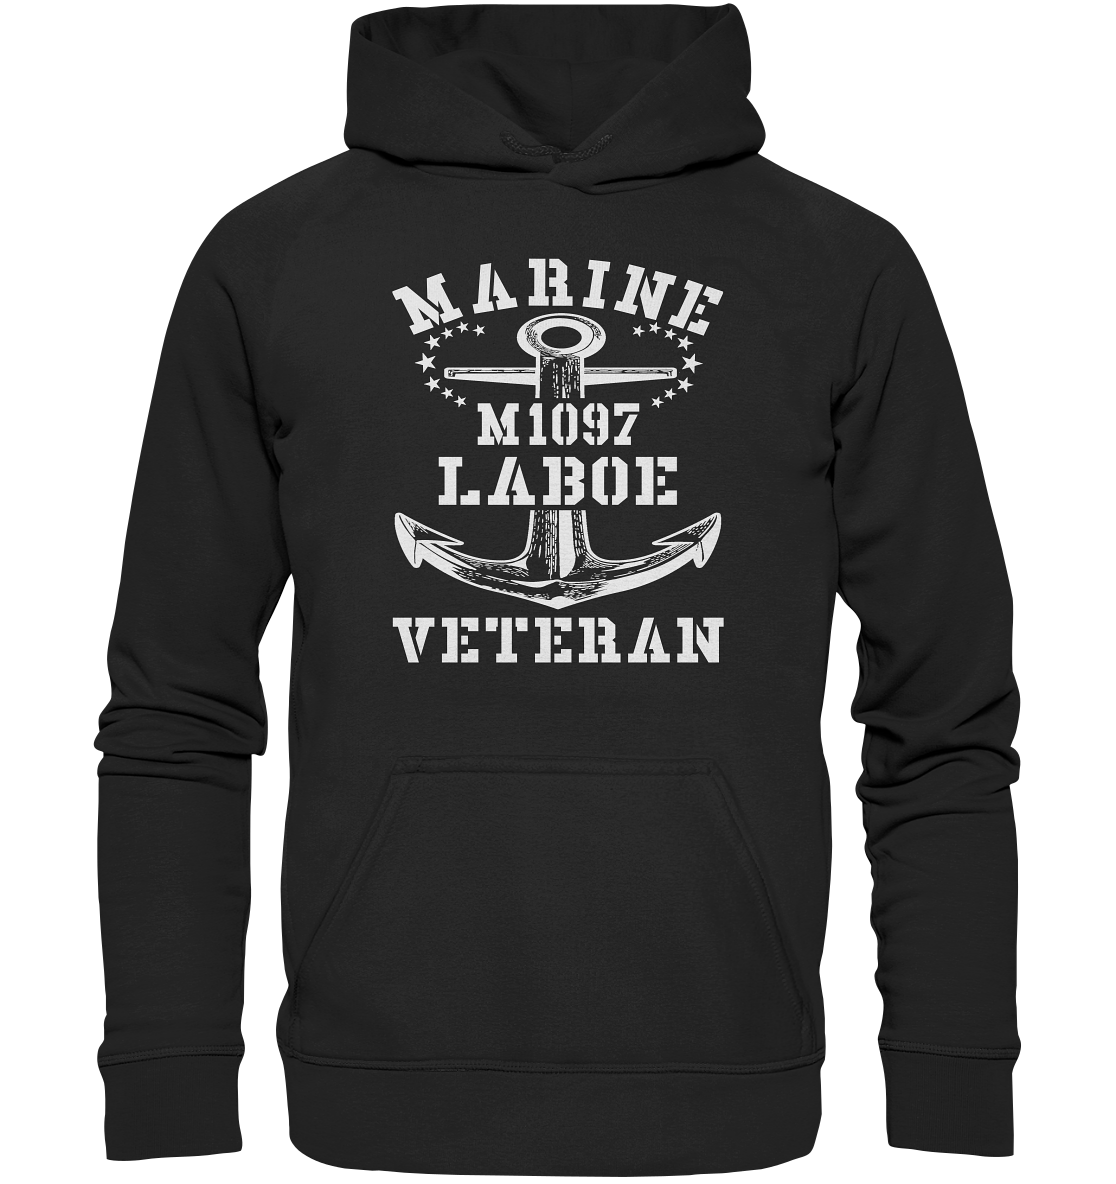 M1097 LABOE Marine Veteran - Basic Unisex Hoodie XL